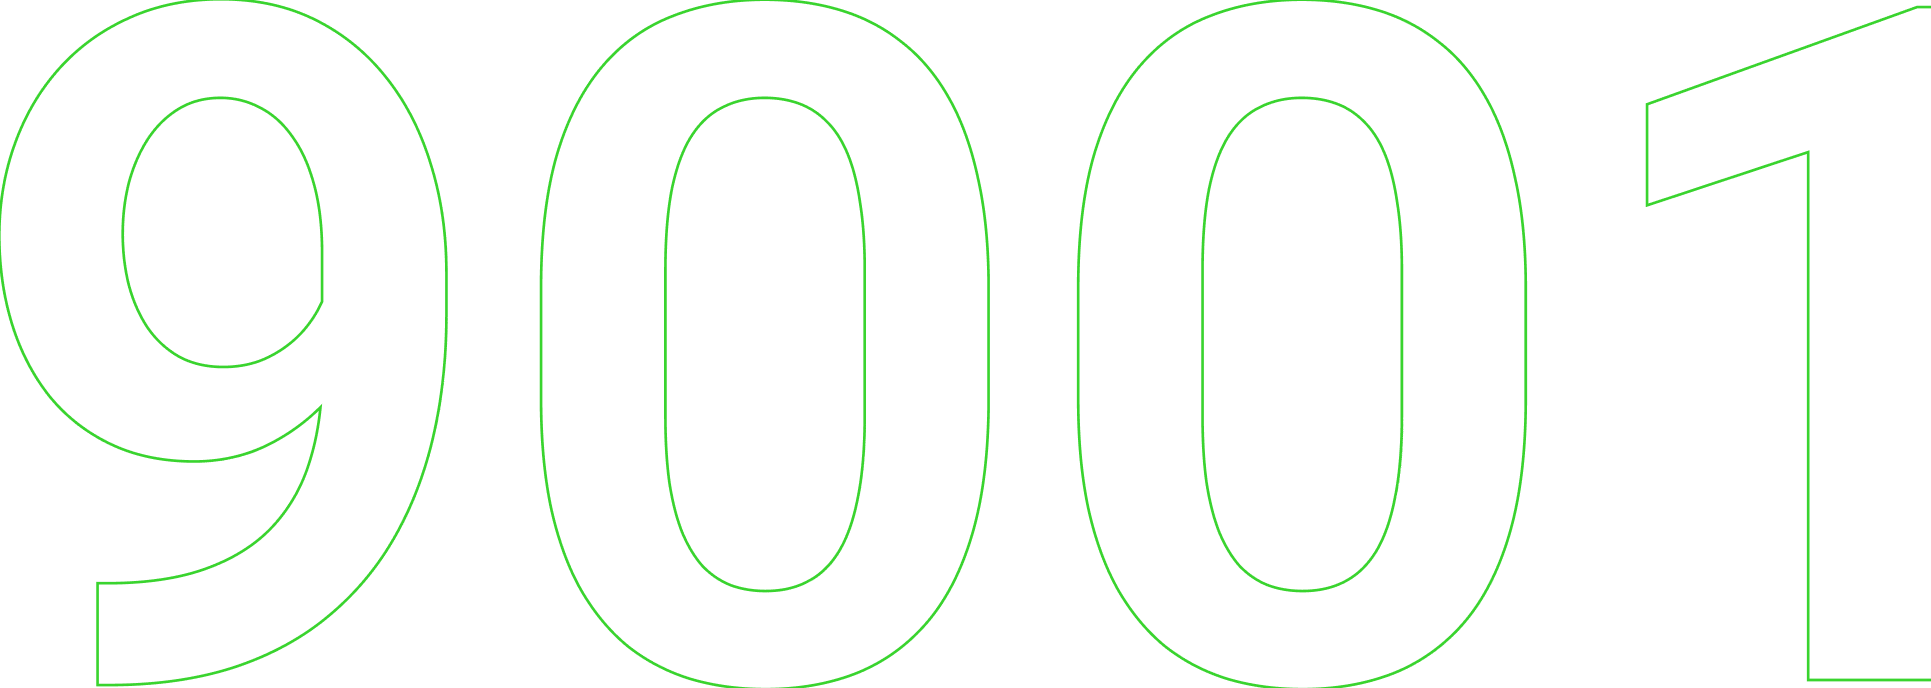 norma iso 9001 | sistema calidad iso 9001 banner verde iso 9001